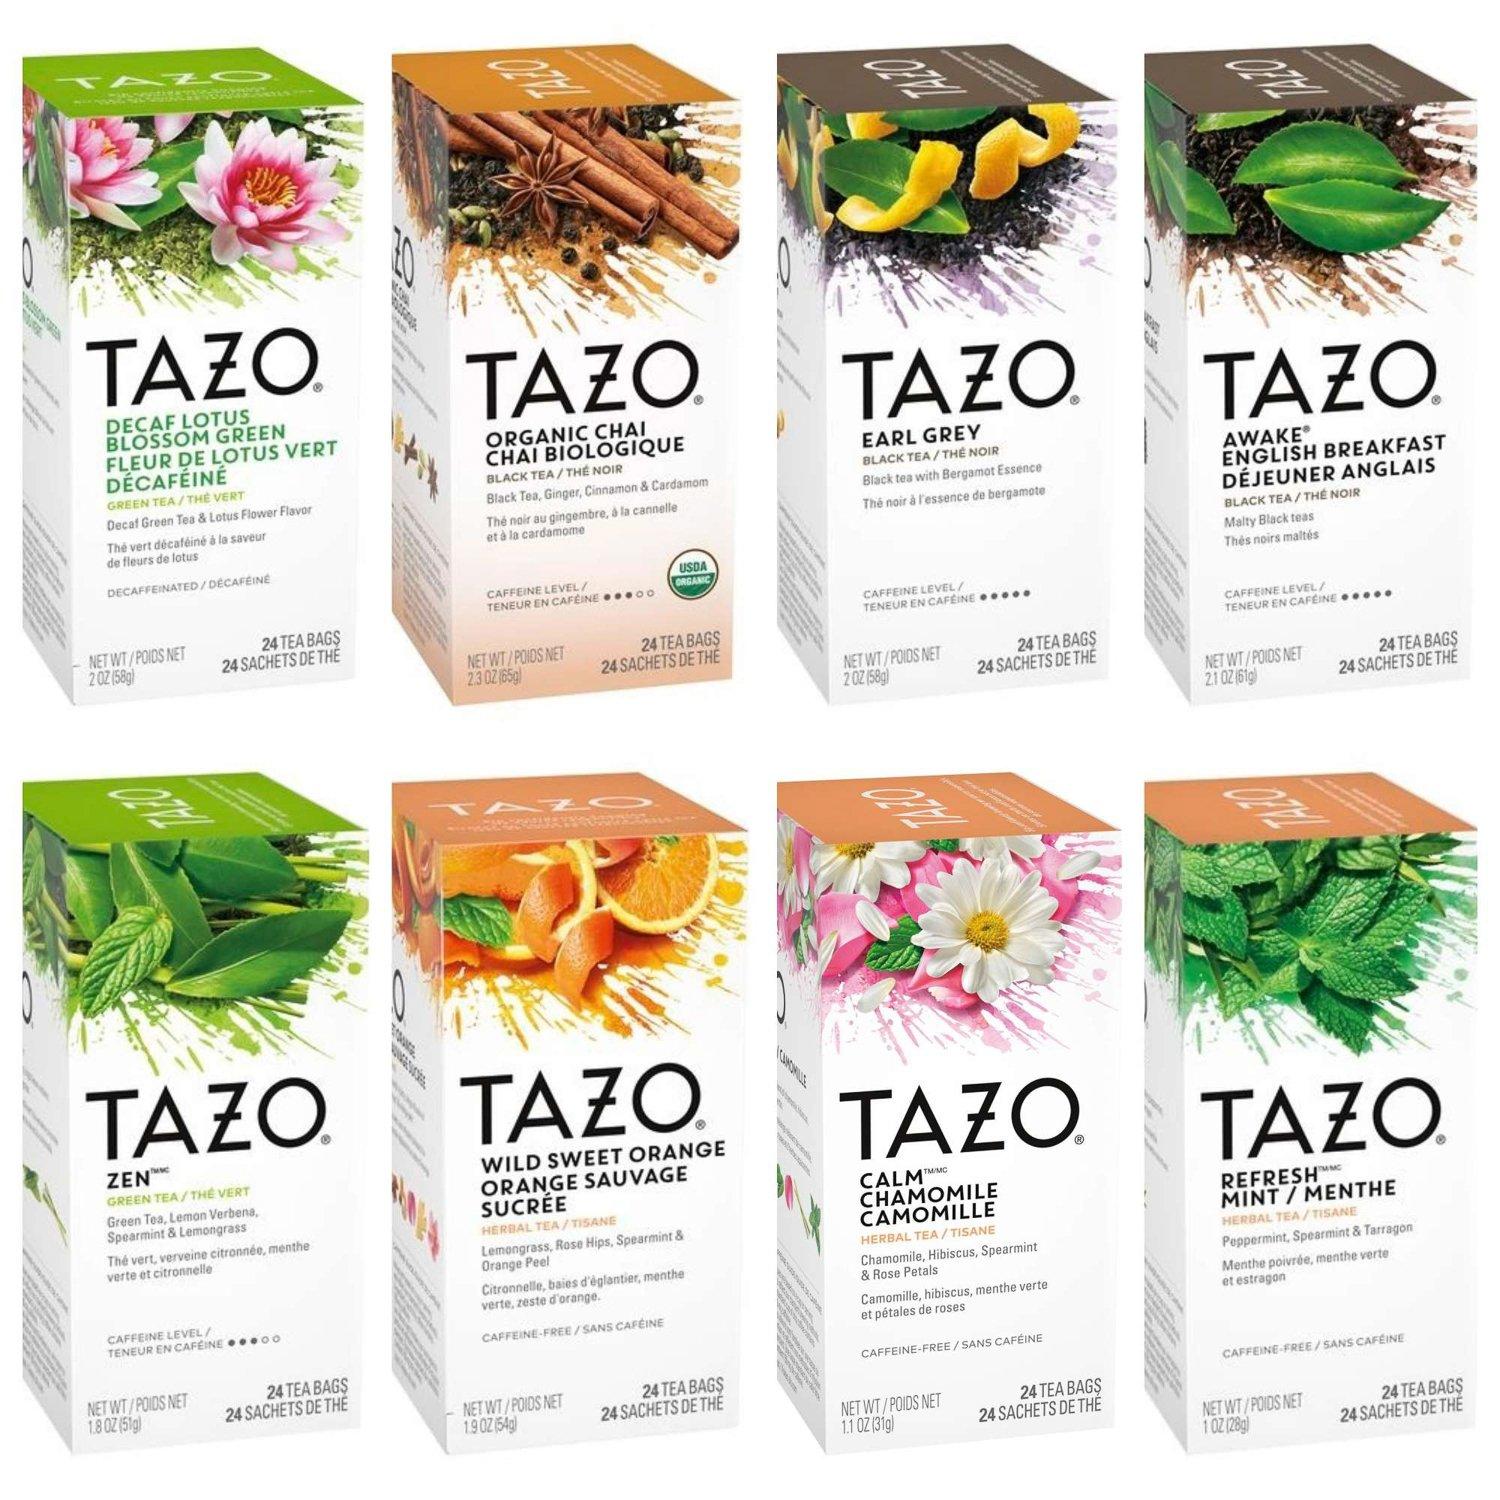 Share more than 121 tazo tea bags latest - esthdonghoadian